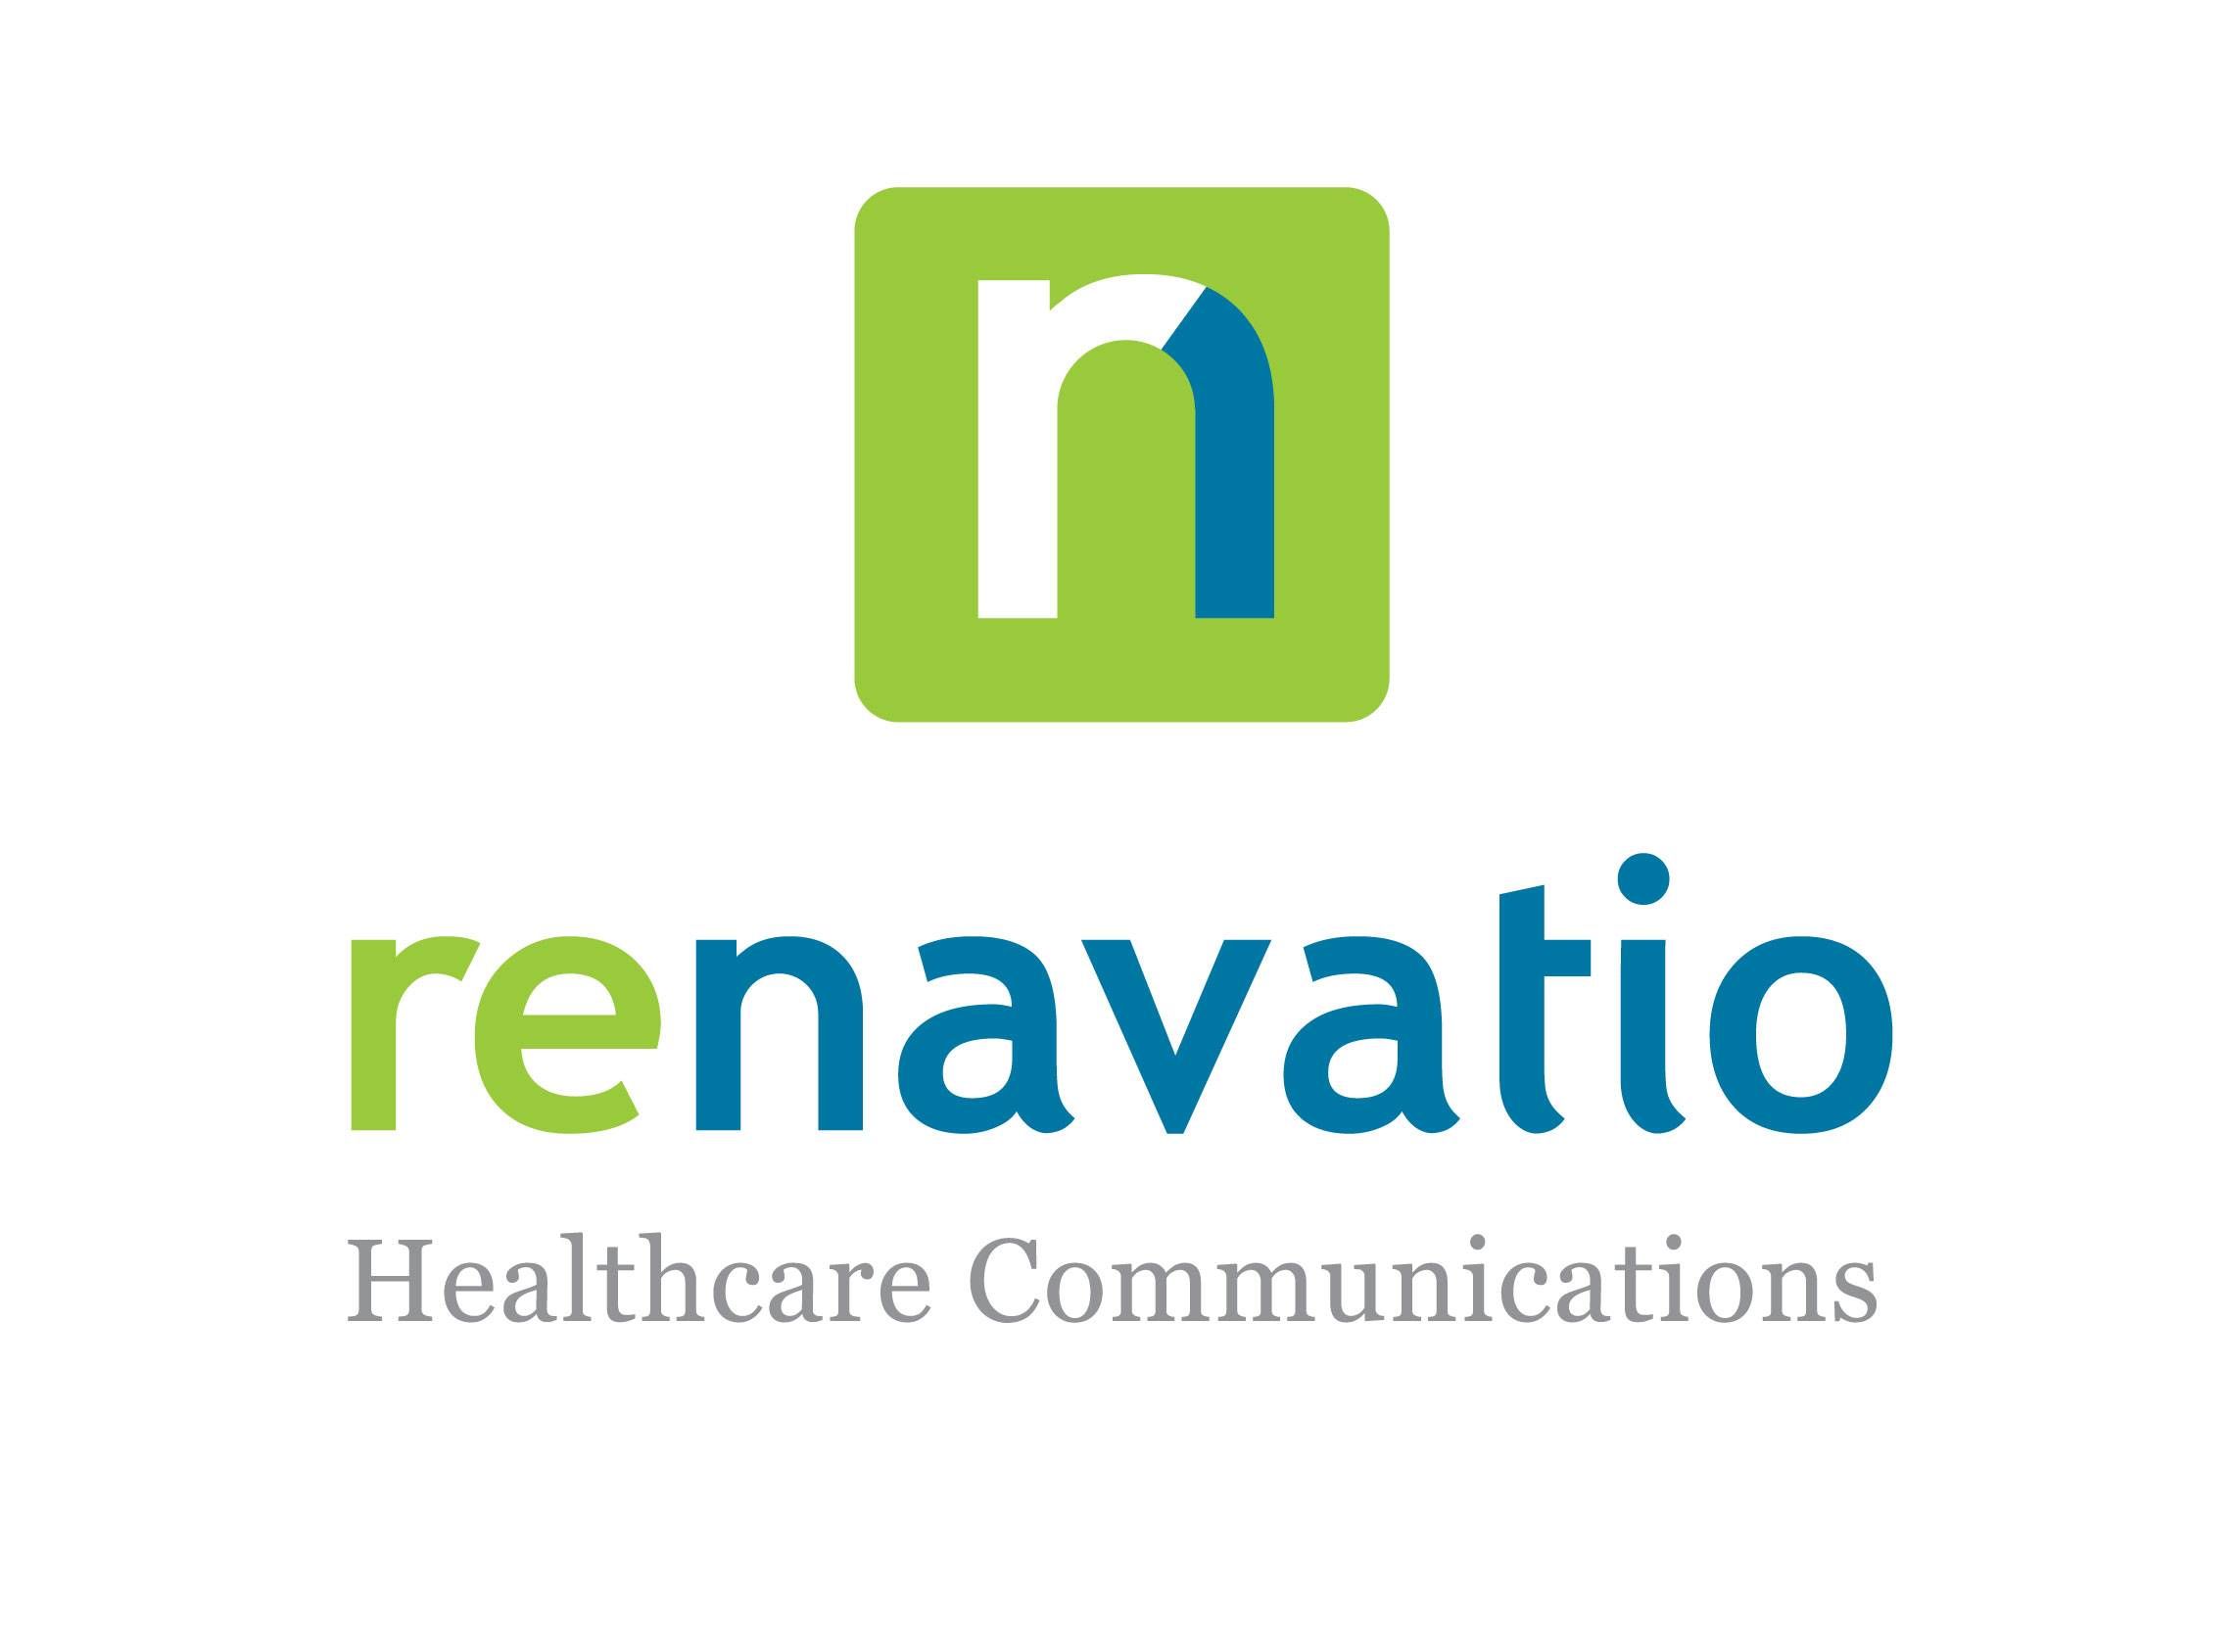 Renavatio Healthcare Communications